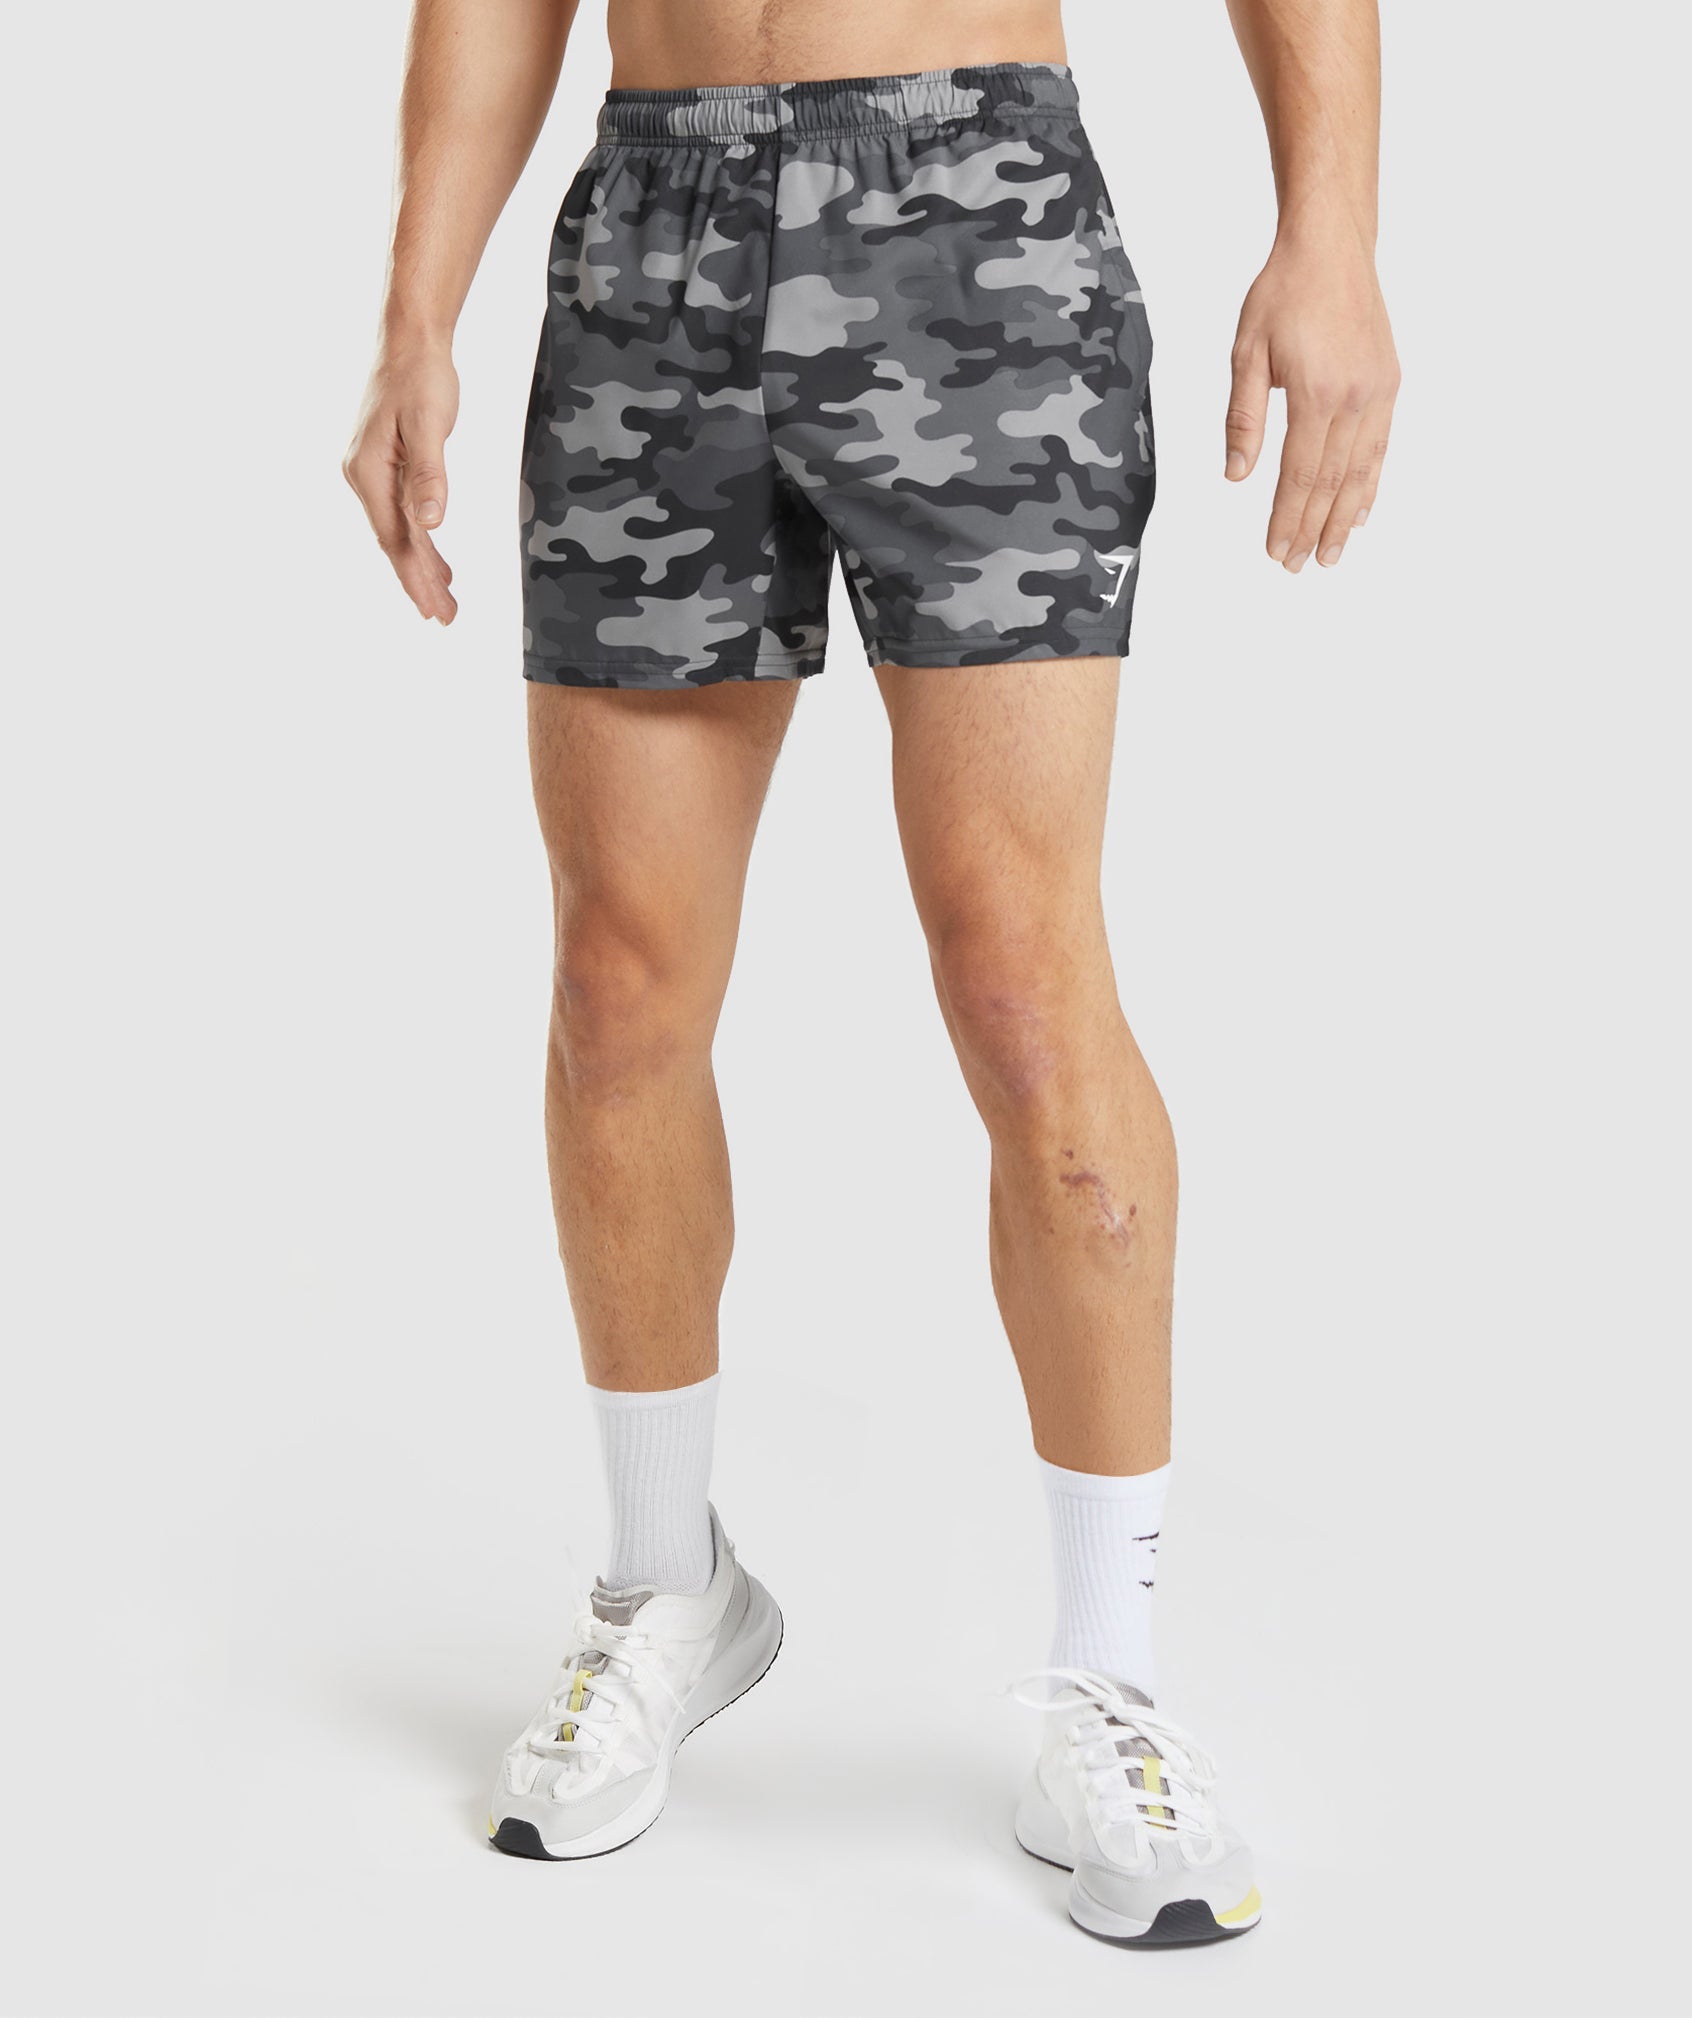 Gymshark Vital Seamless Shorts Gray Size M - $24 (40% Off Retail